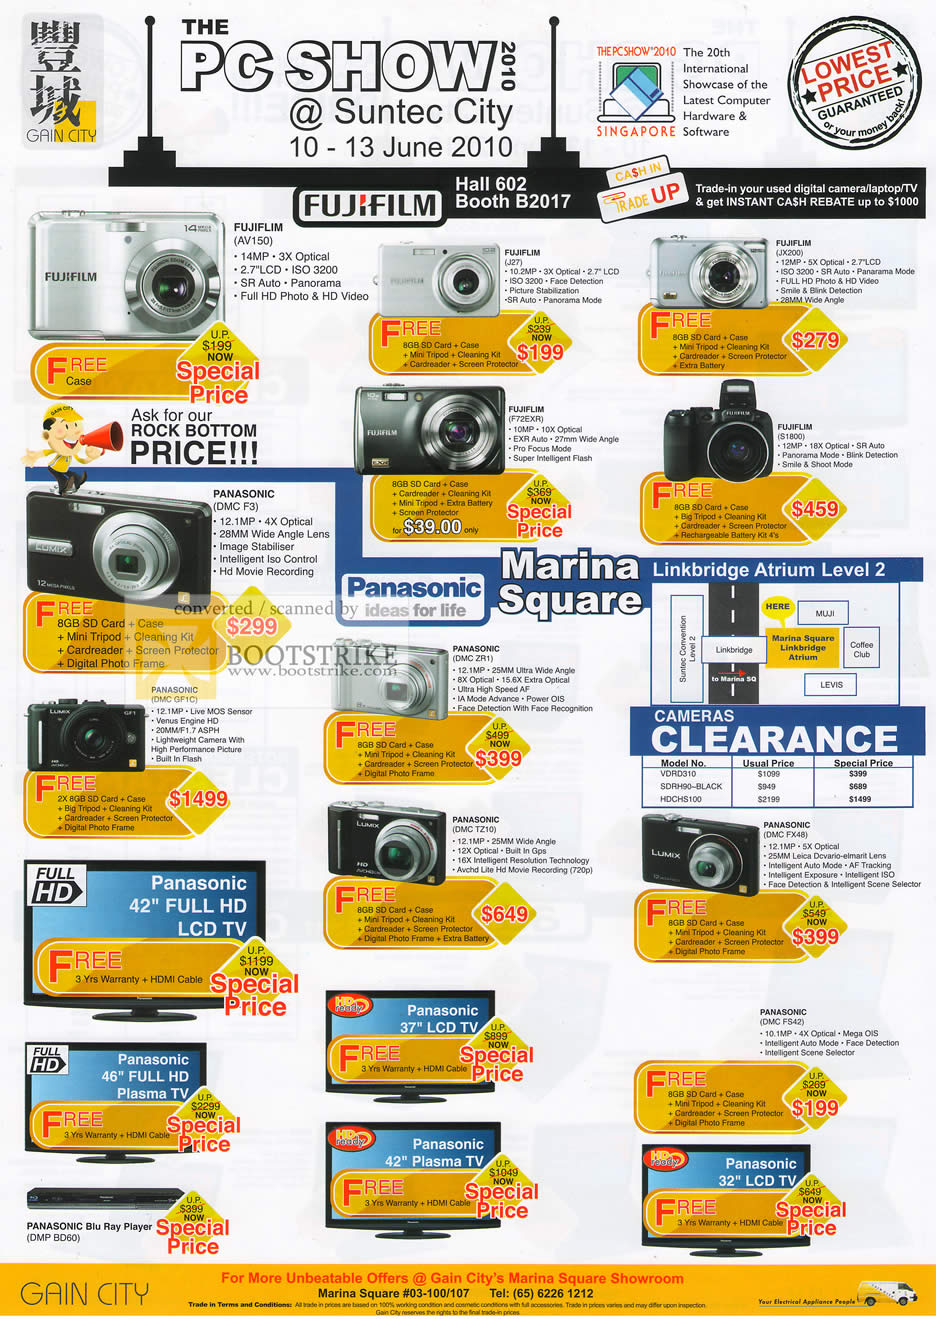 PC Show 2010 price list image brochure of Gain City Digital Cameras Fujifilm AV150 J27 Panasonic LCD TV Plasma DMC 